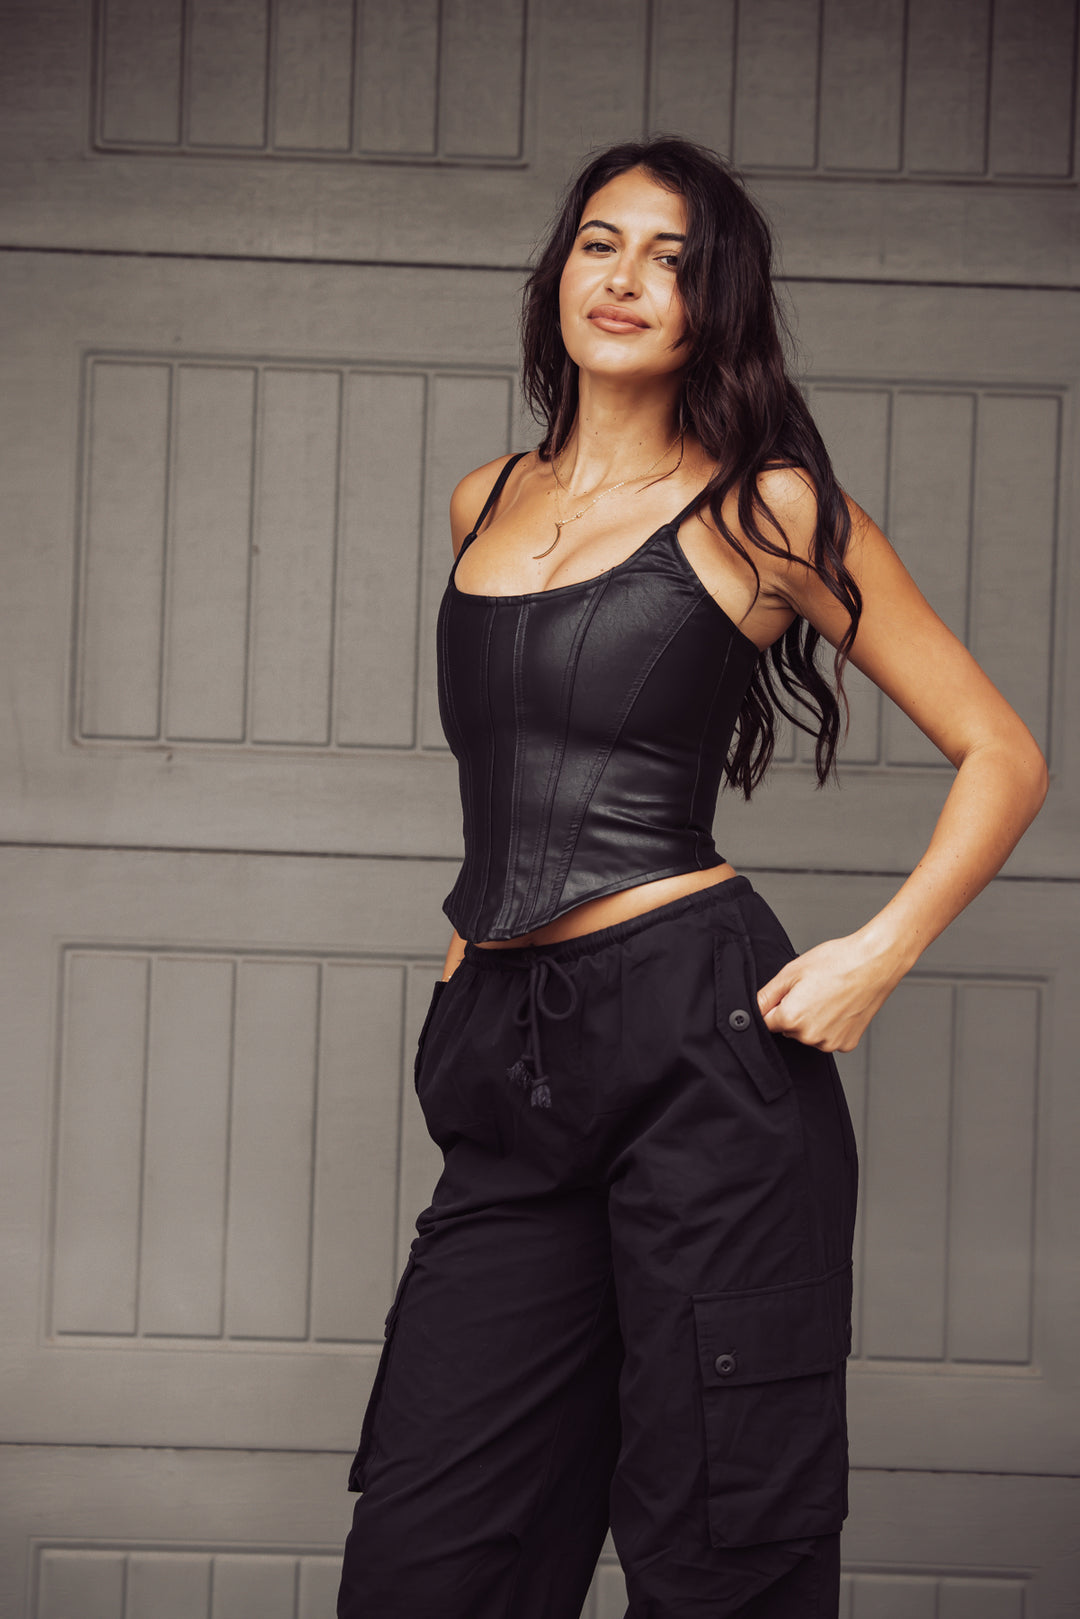 Nina Faux Leather Corset Top - Black